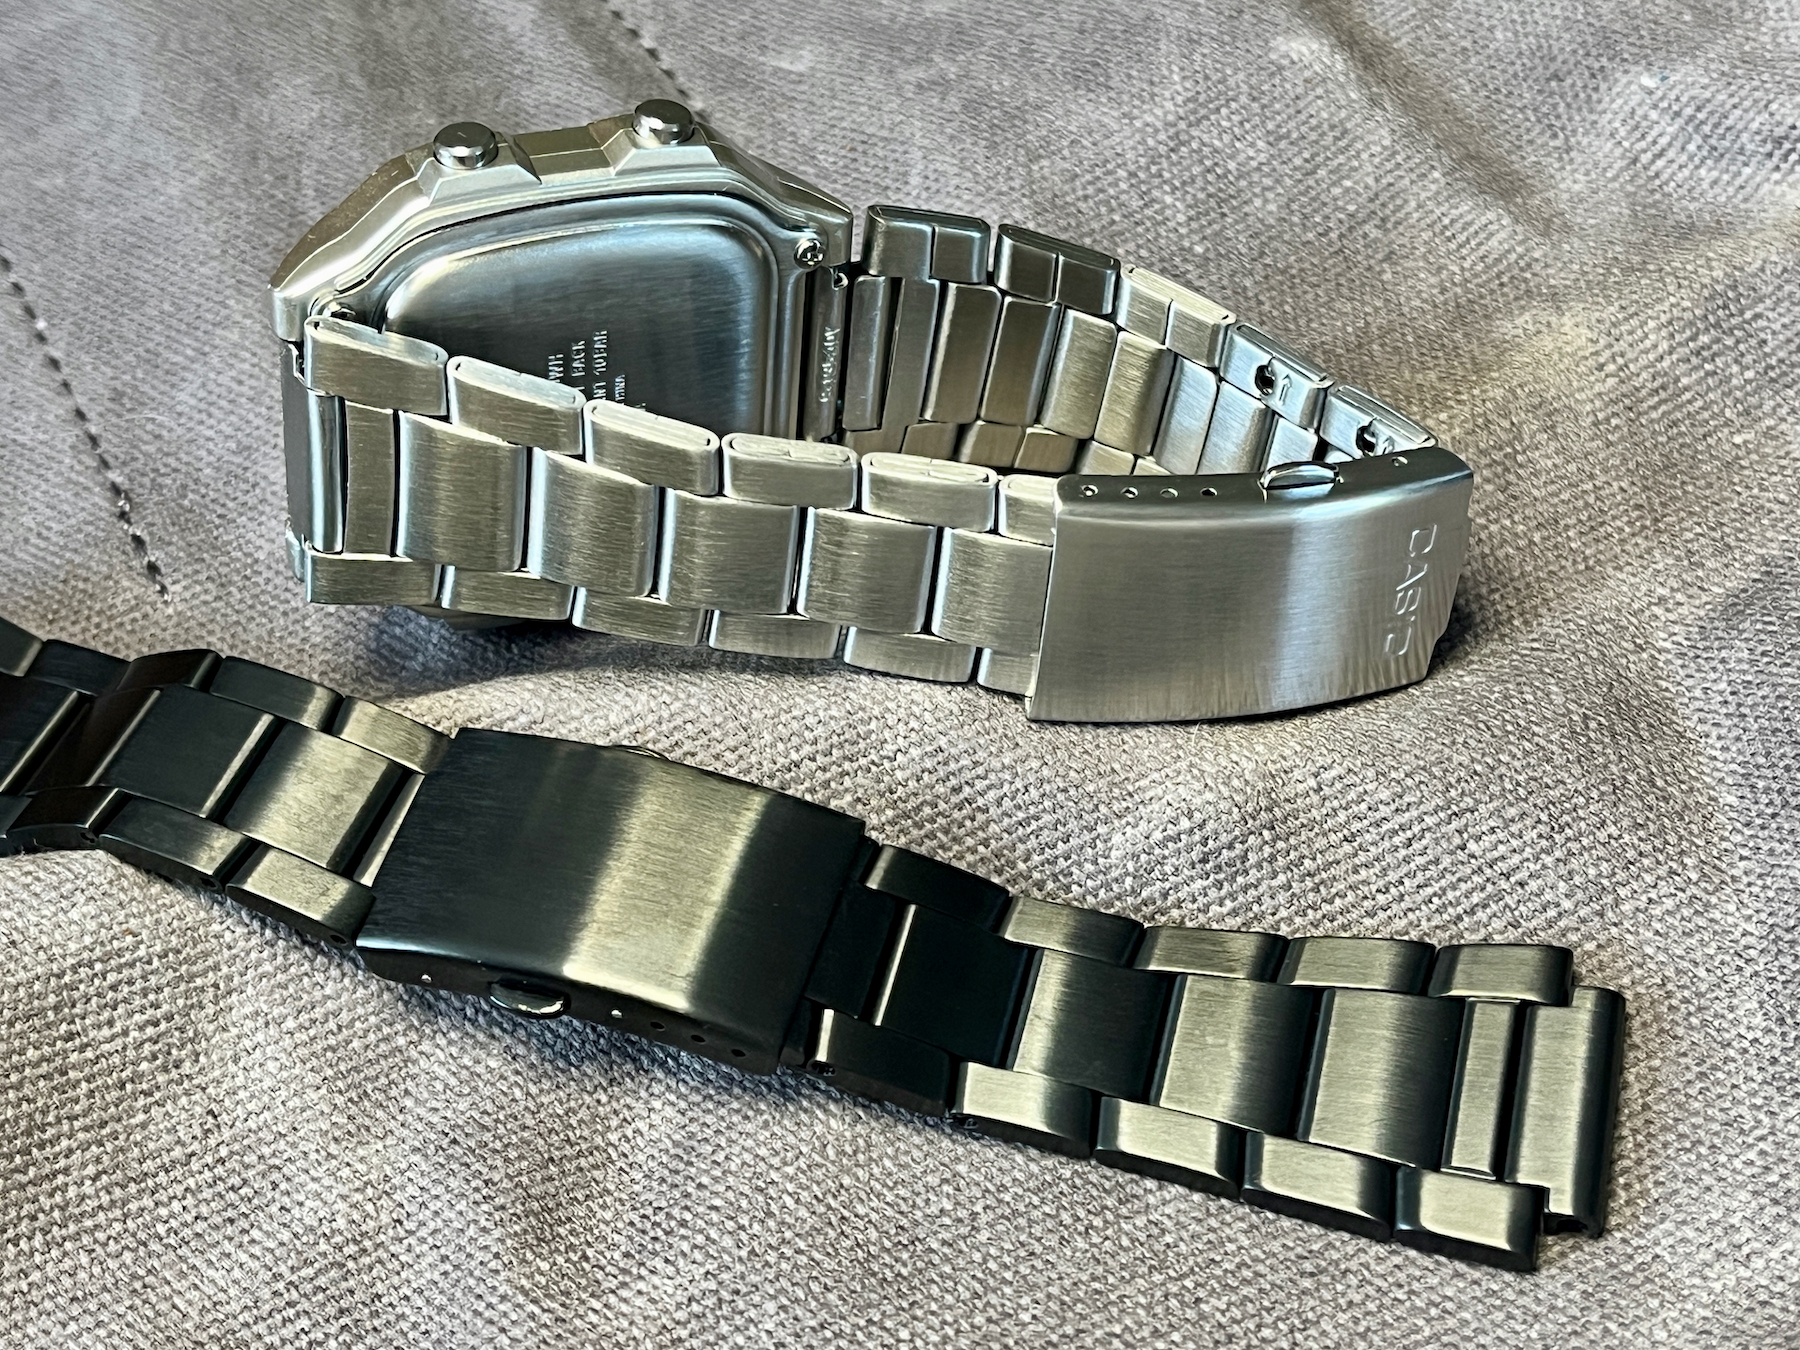 Casio AE1200, Part 6: SKXMod Bracelet